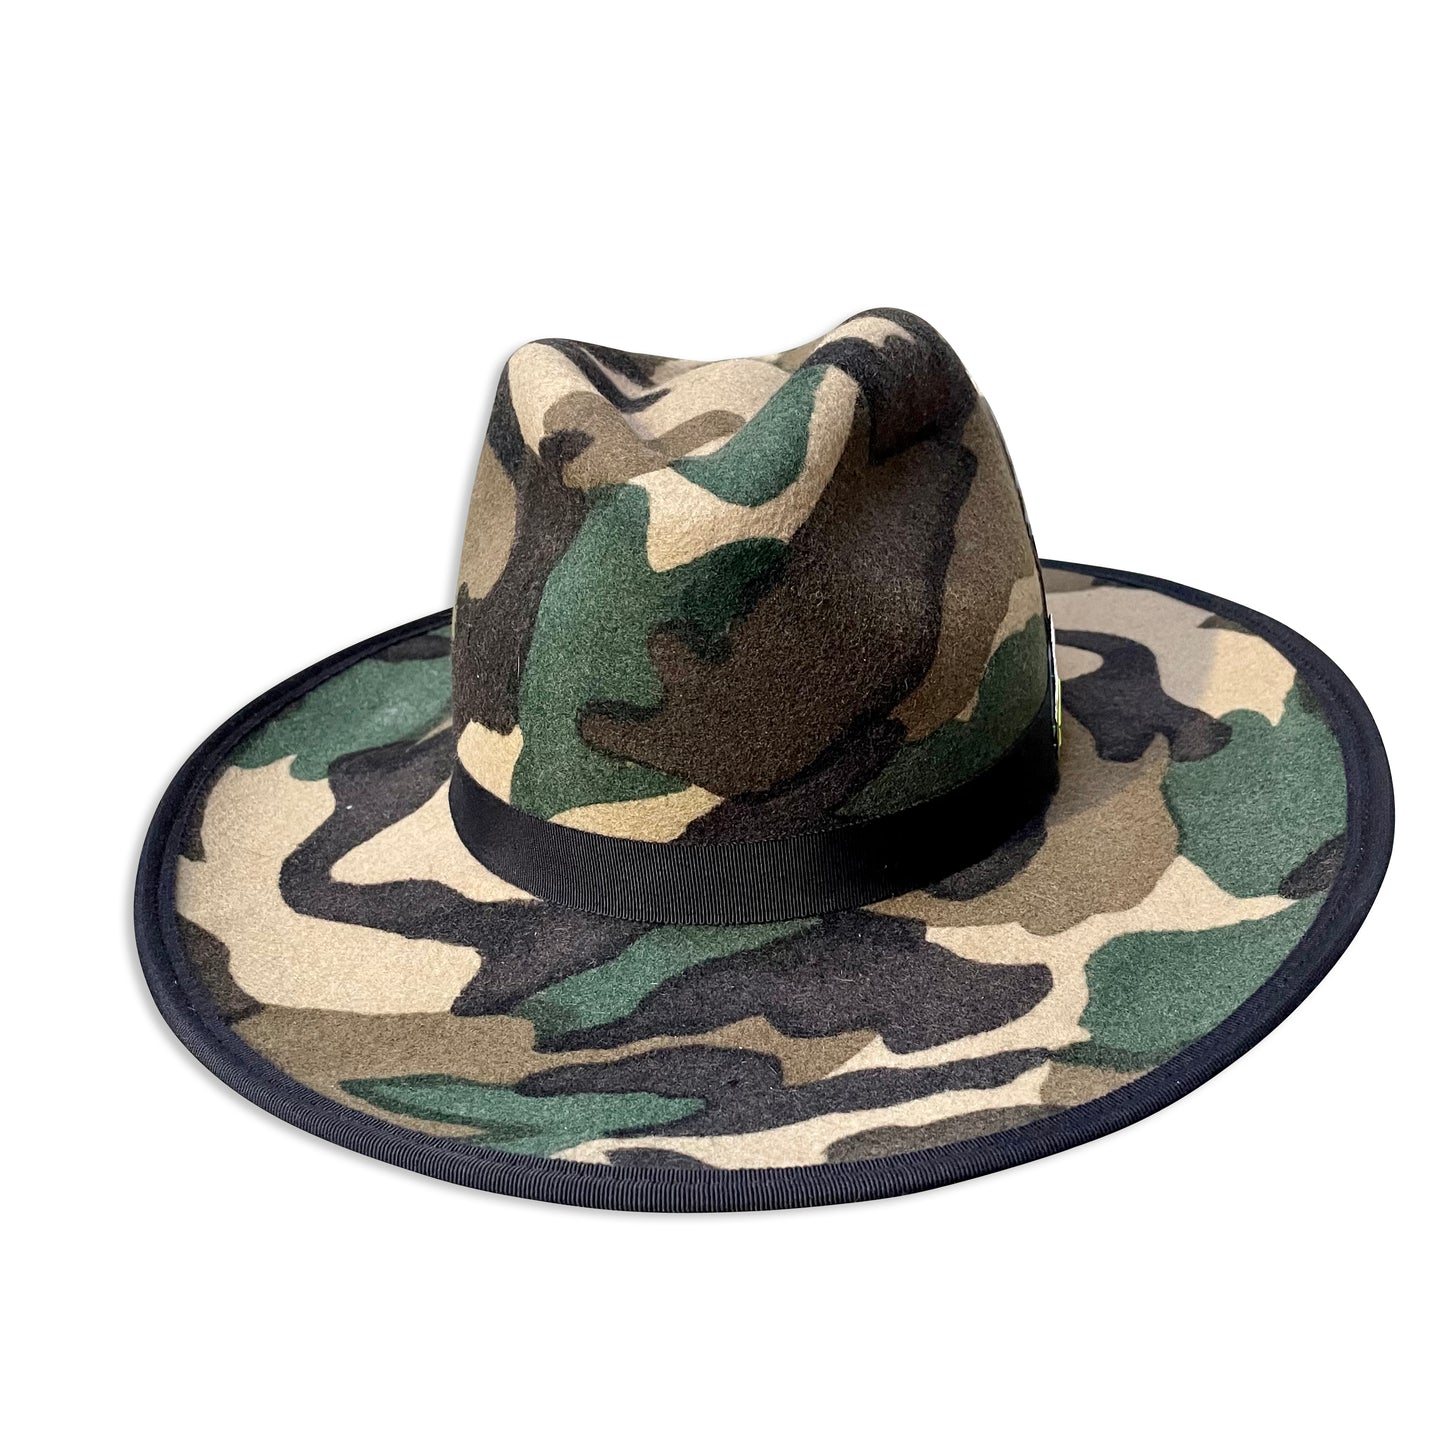 Camo Cowboy Felt Hat